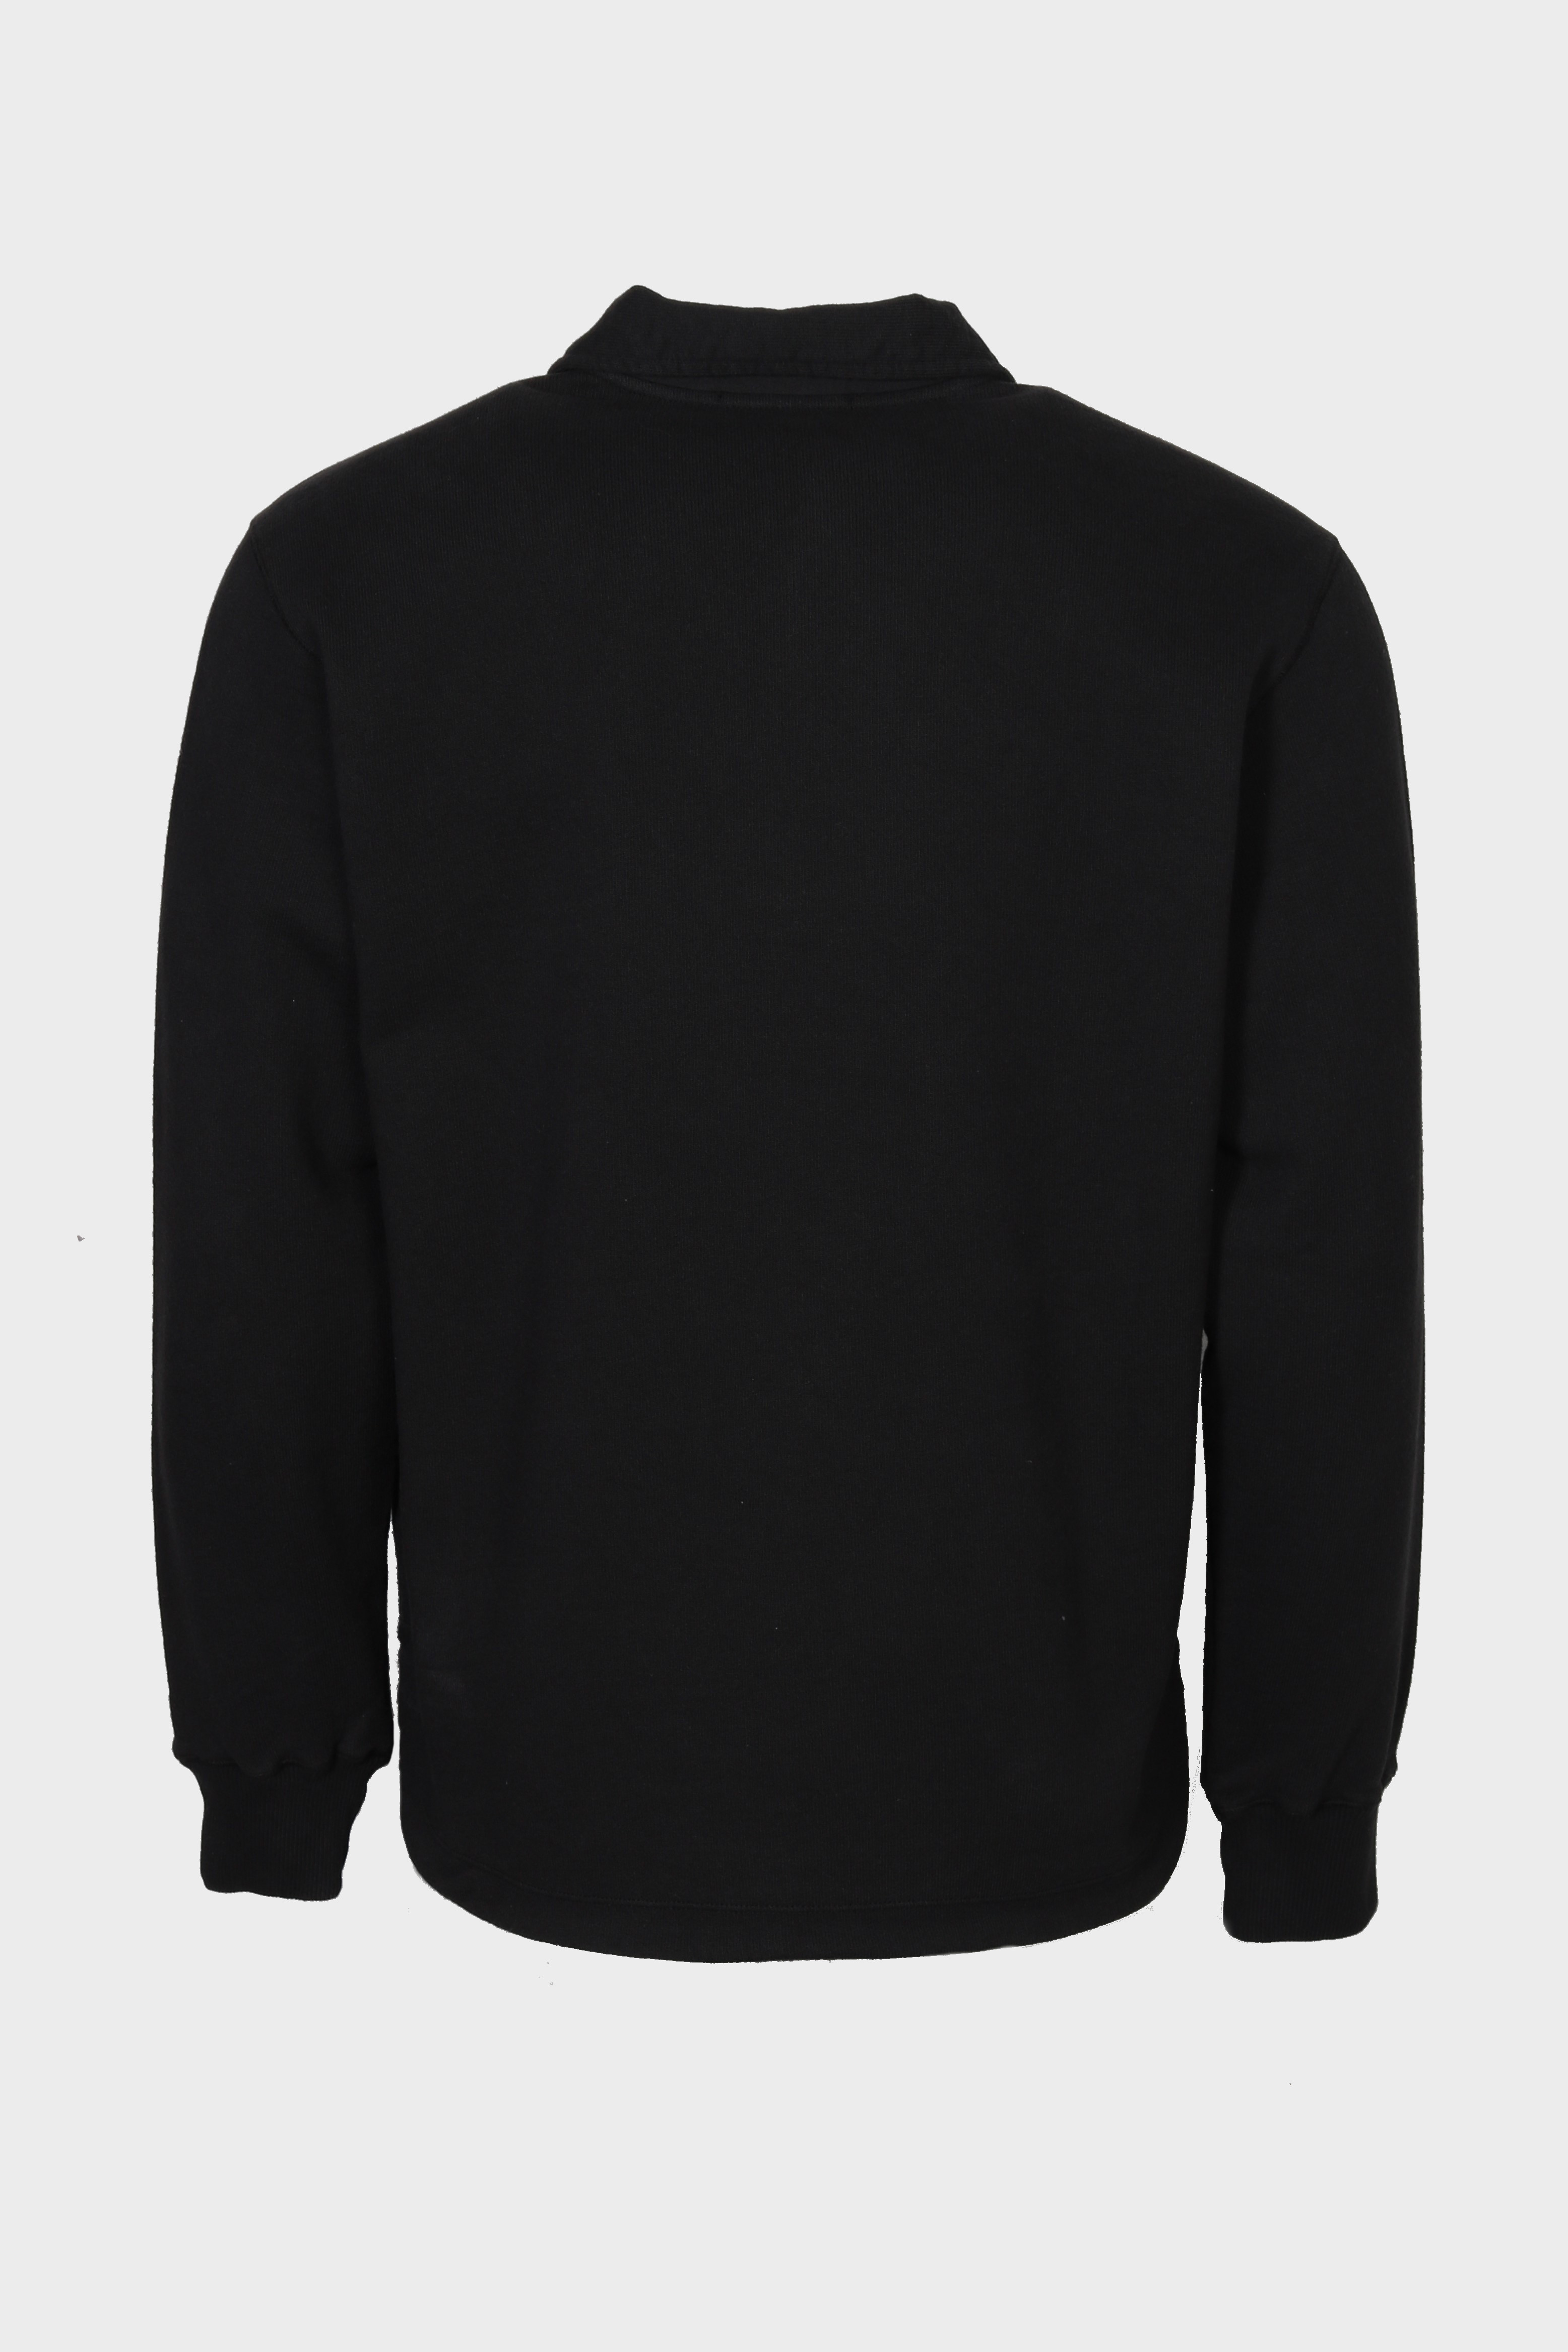 STONE ISLAND Stamp Half Zip Sweatshirt in Black